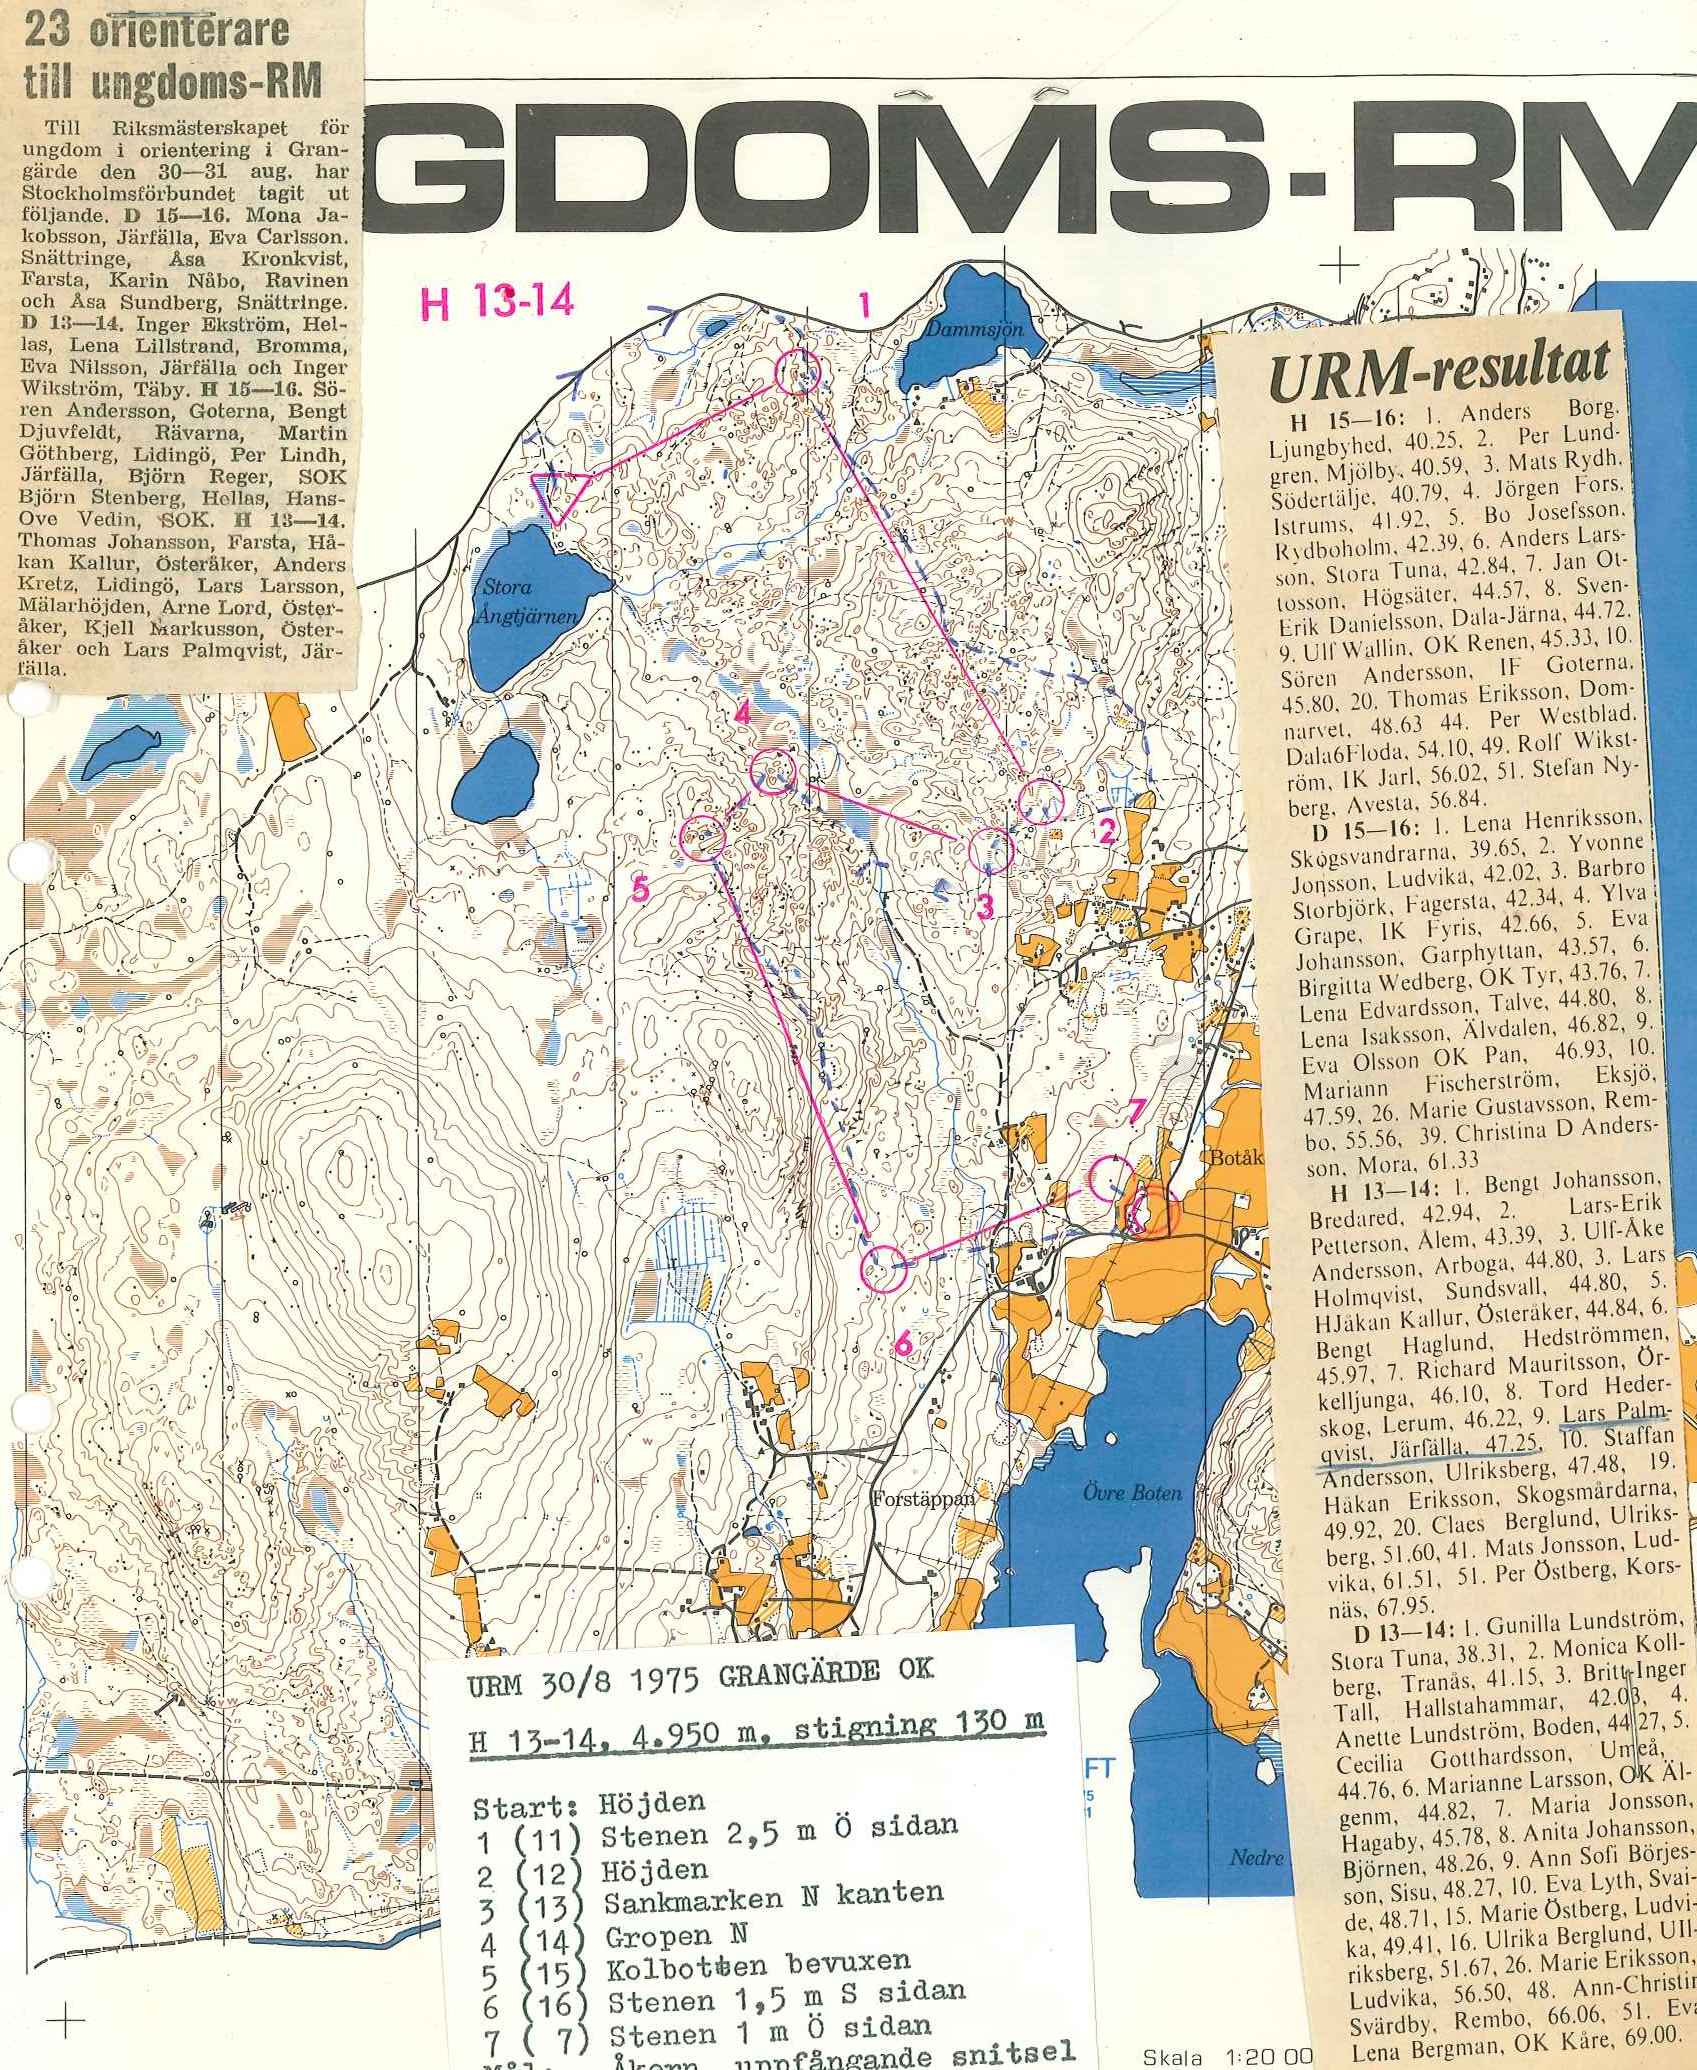 USM (30-08-1975)